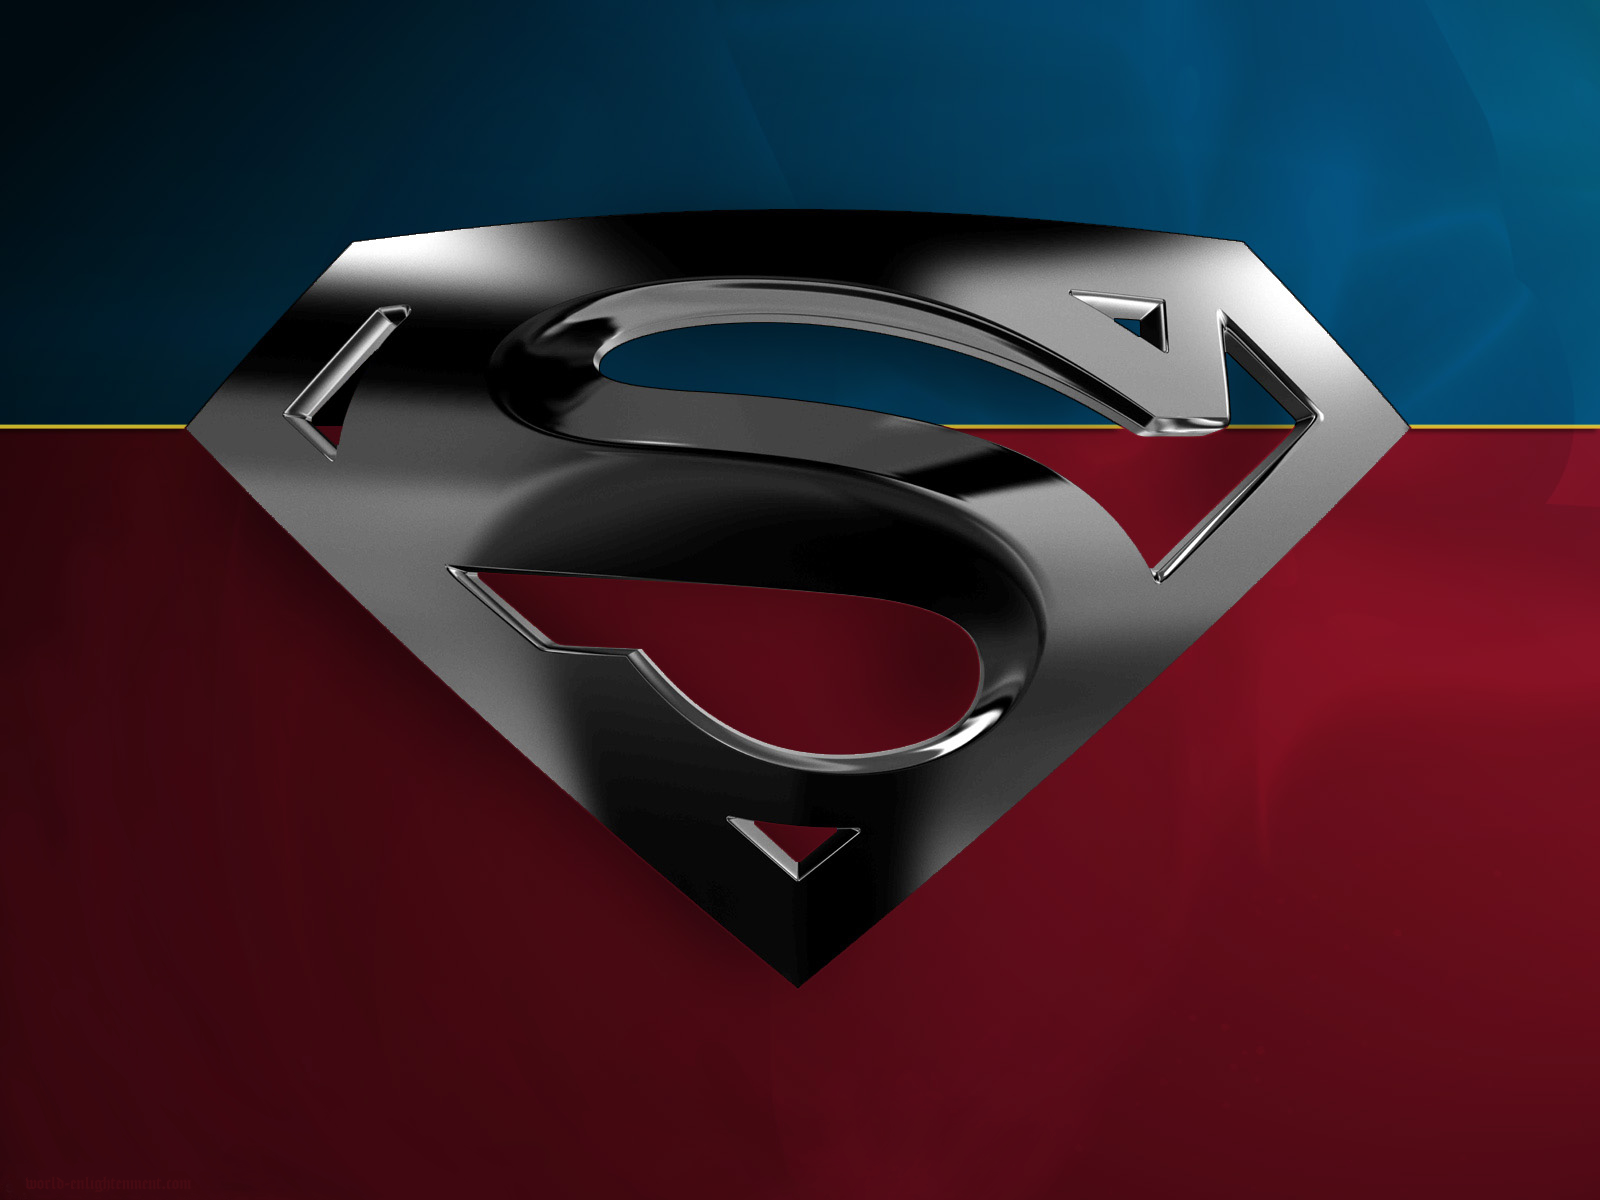 Superman Desktop Wallpaper 1280 x 1024 and more